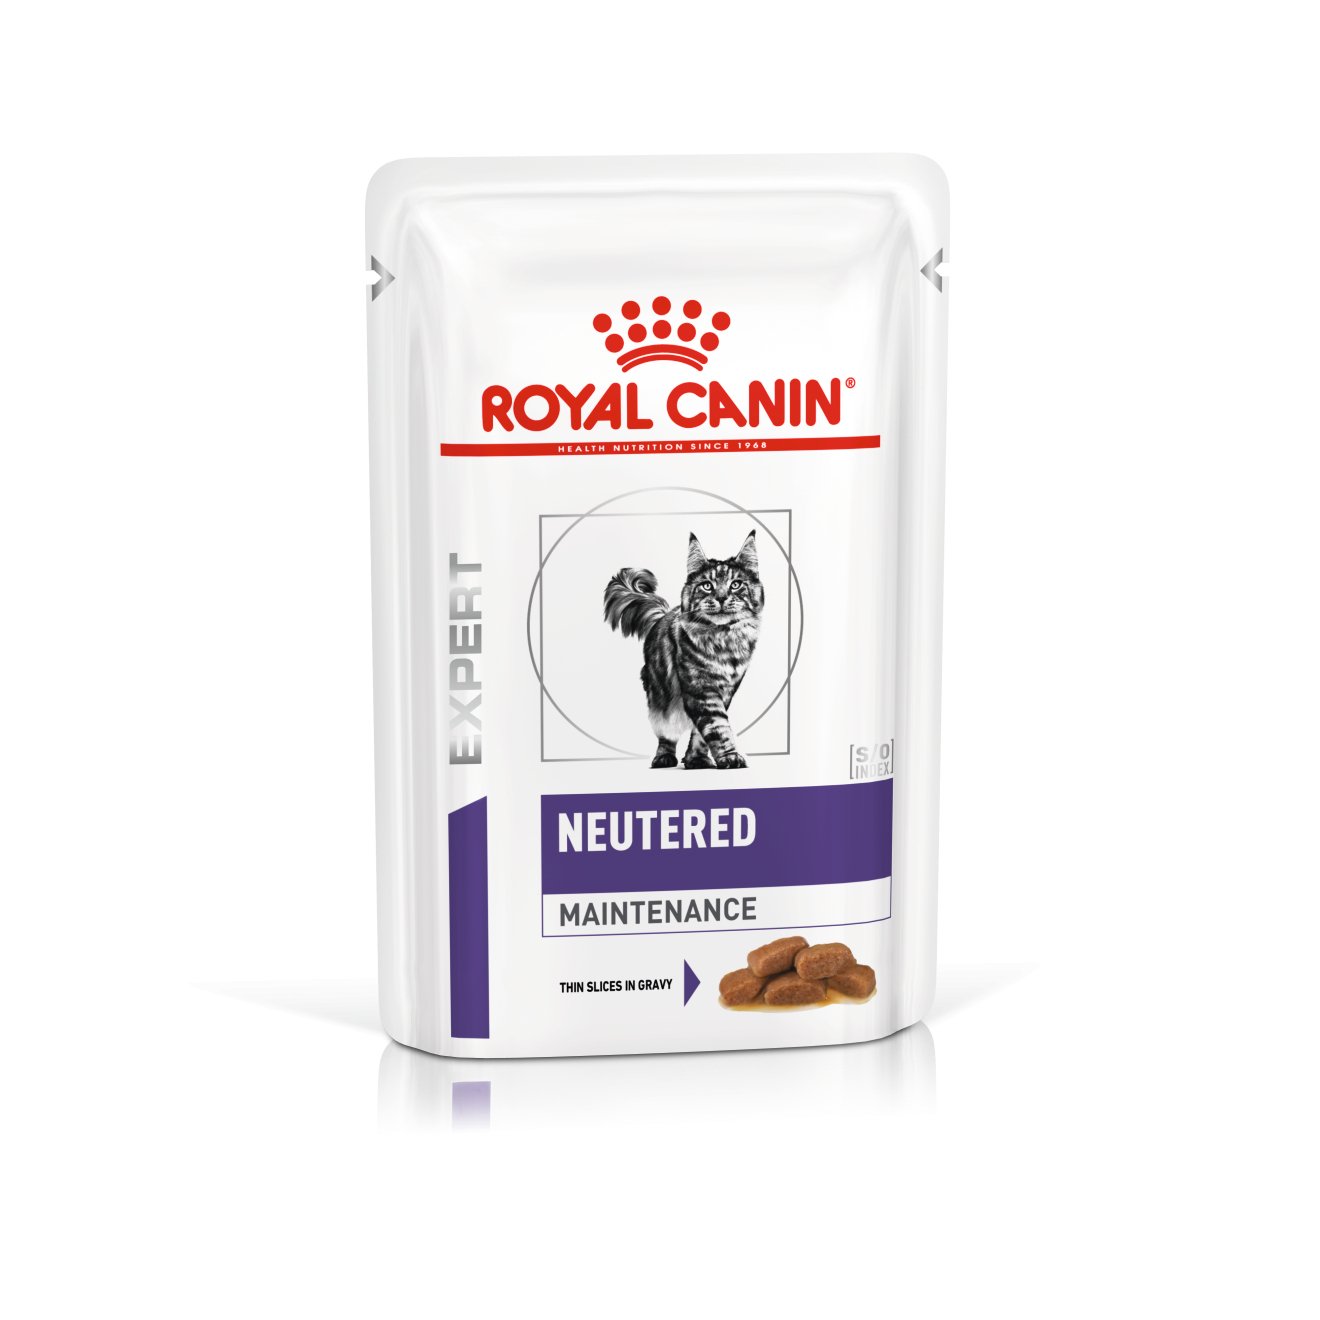 Royal Canin Veterinary Neutered Maintenance comida húmeda para gatos